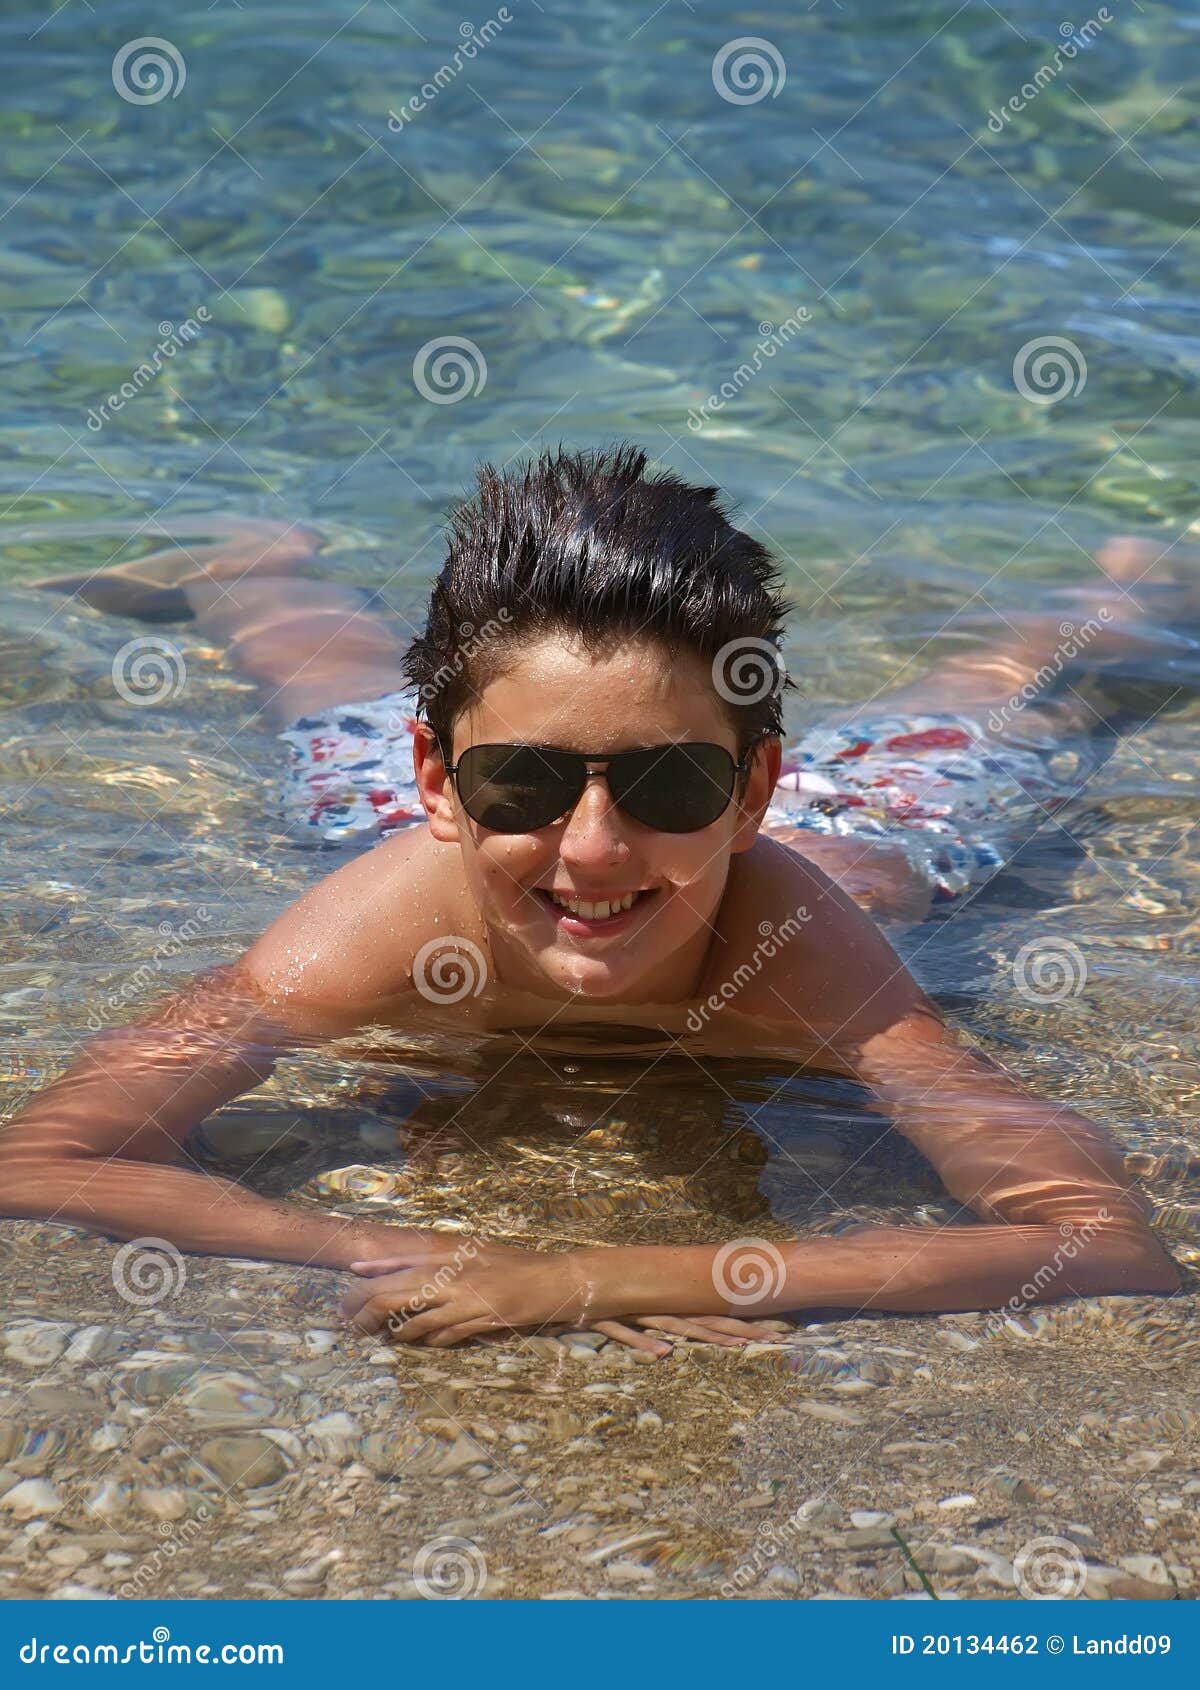 490 Cute Teen Bathing Stock Photos - Free & Royalty-Free Stock